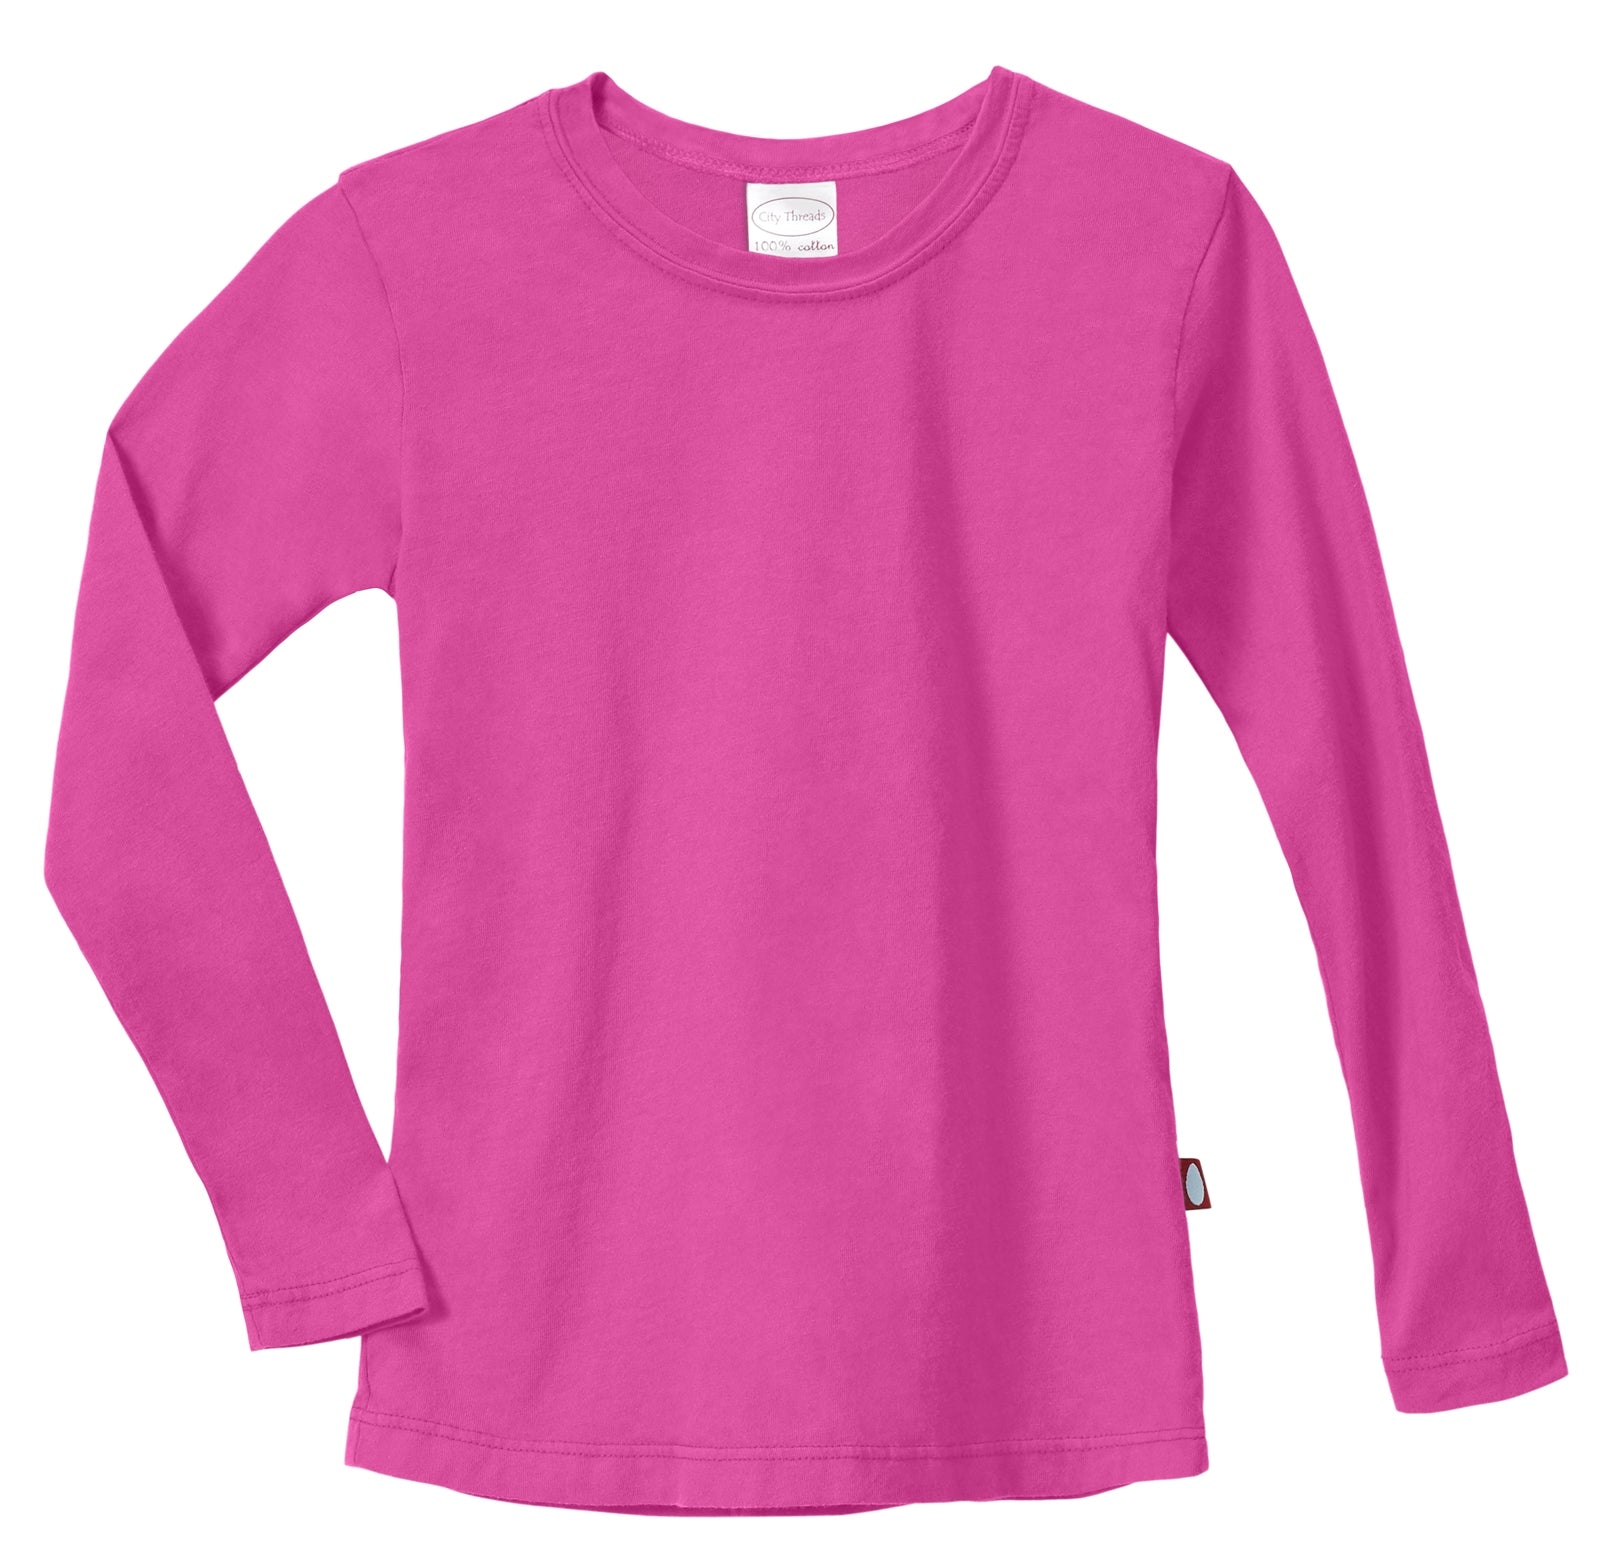 Pink Cotton T-Shirt